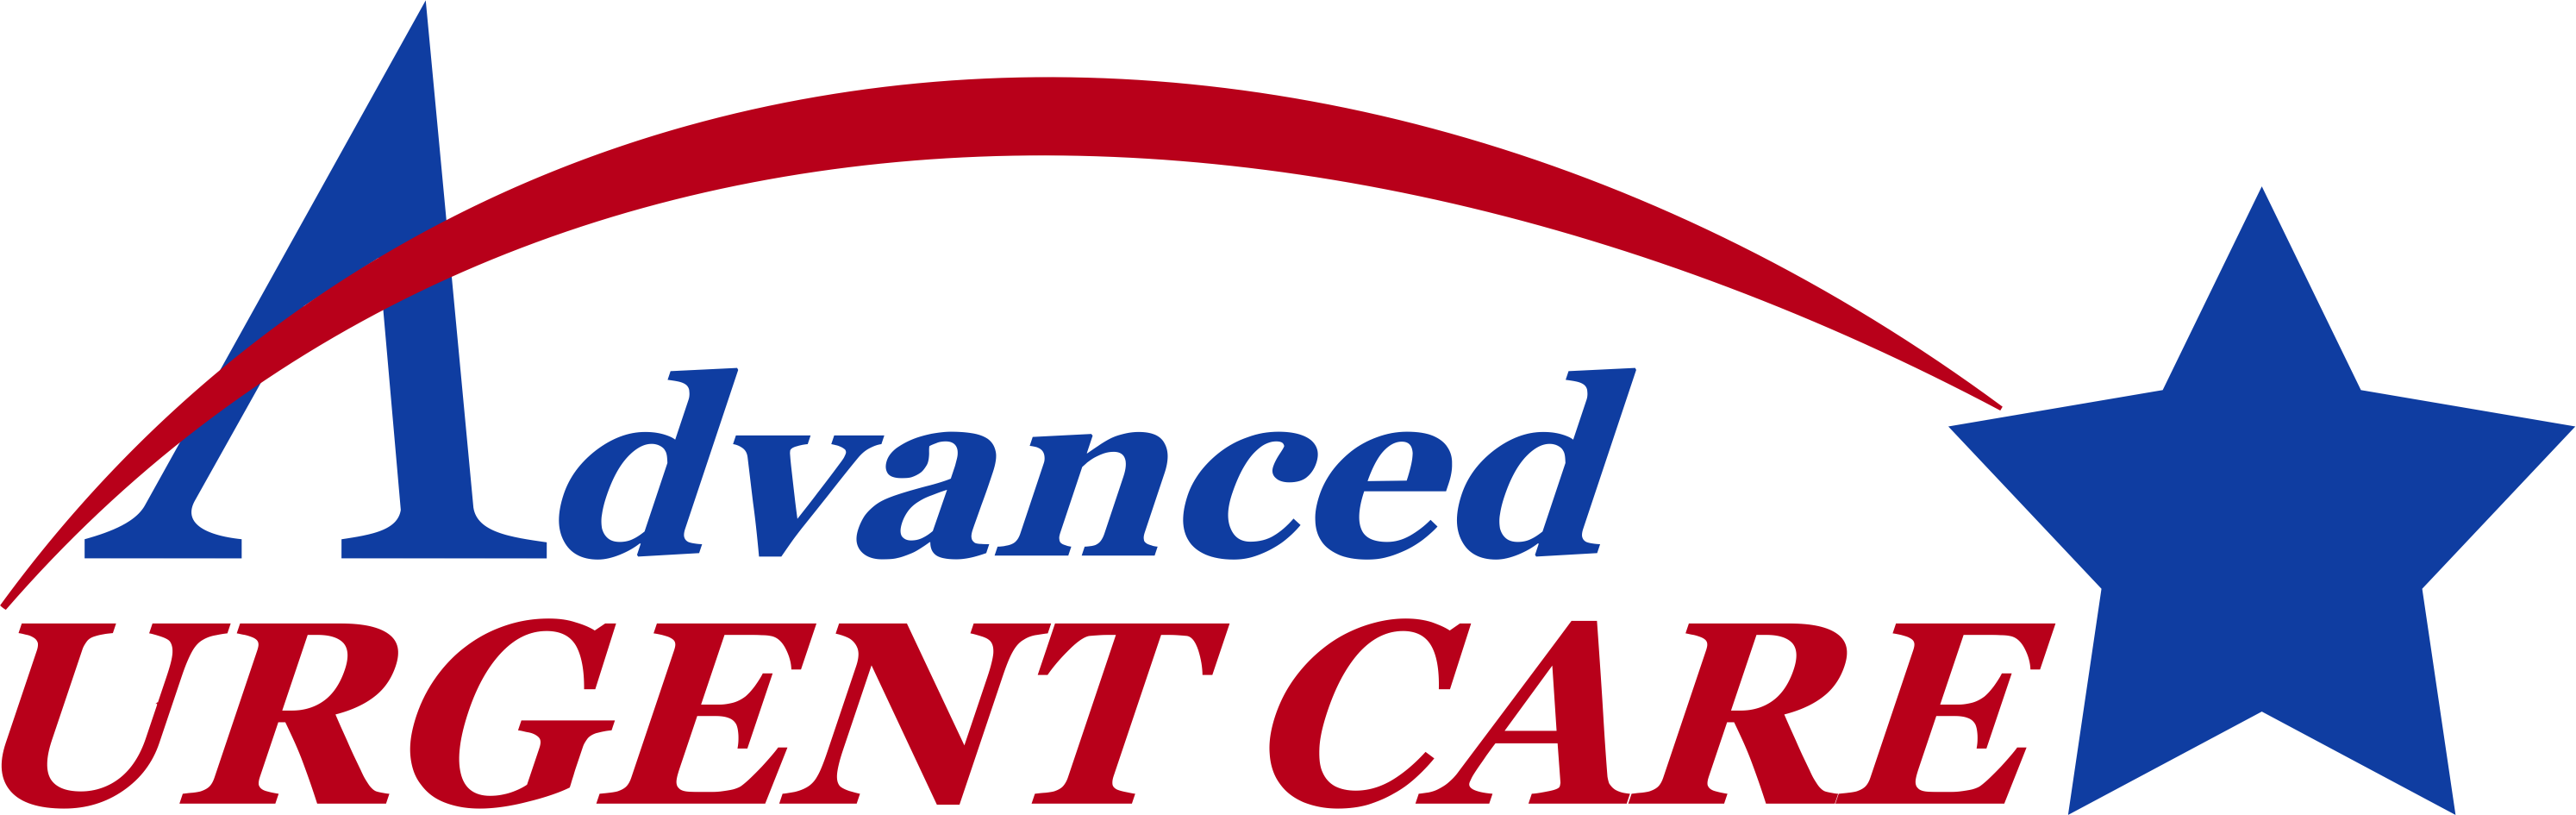 Advanced Urgent Care Orland Park Il Urgent Care Walk - Urgent Care (2988x945)